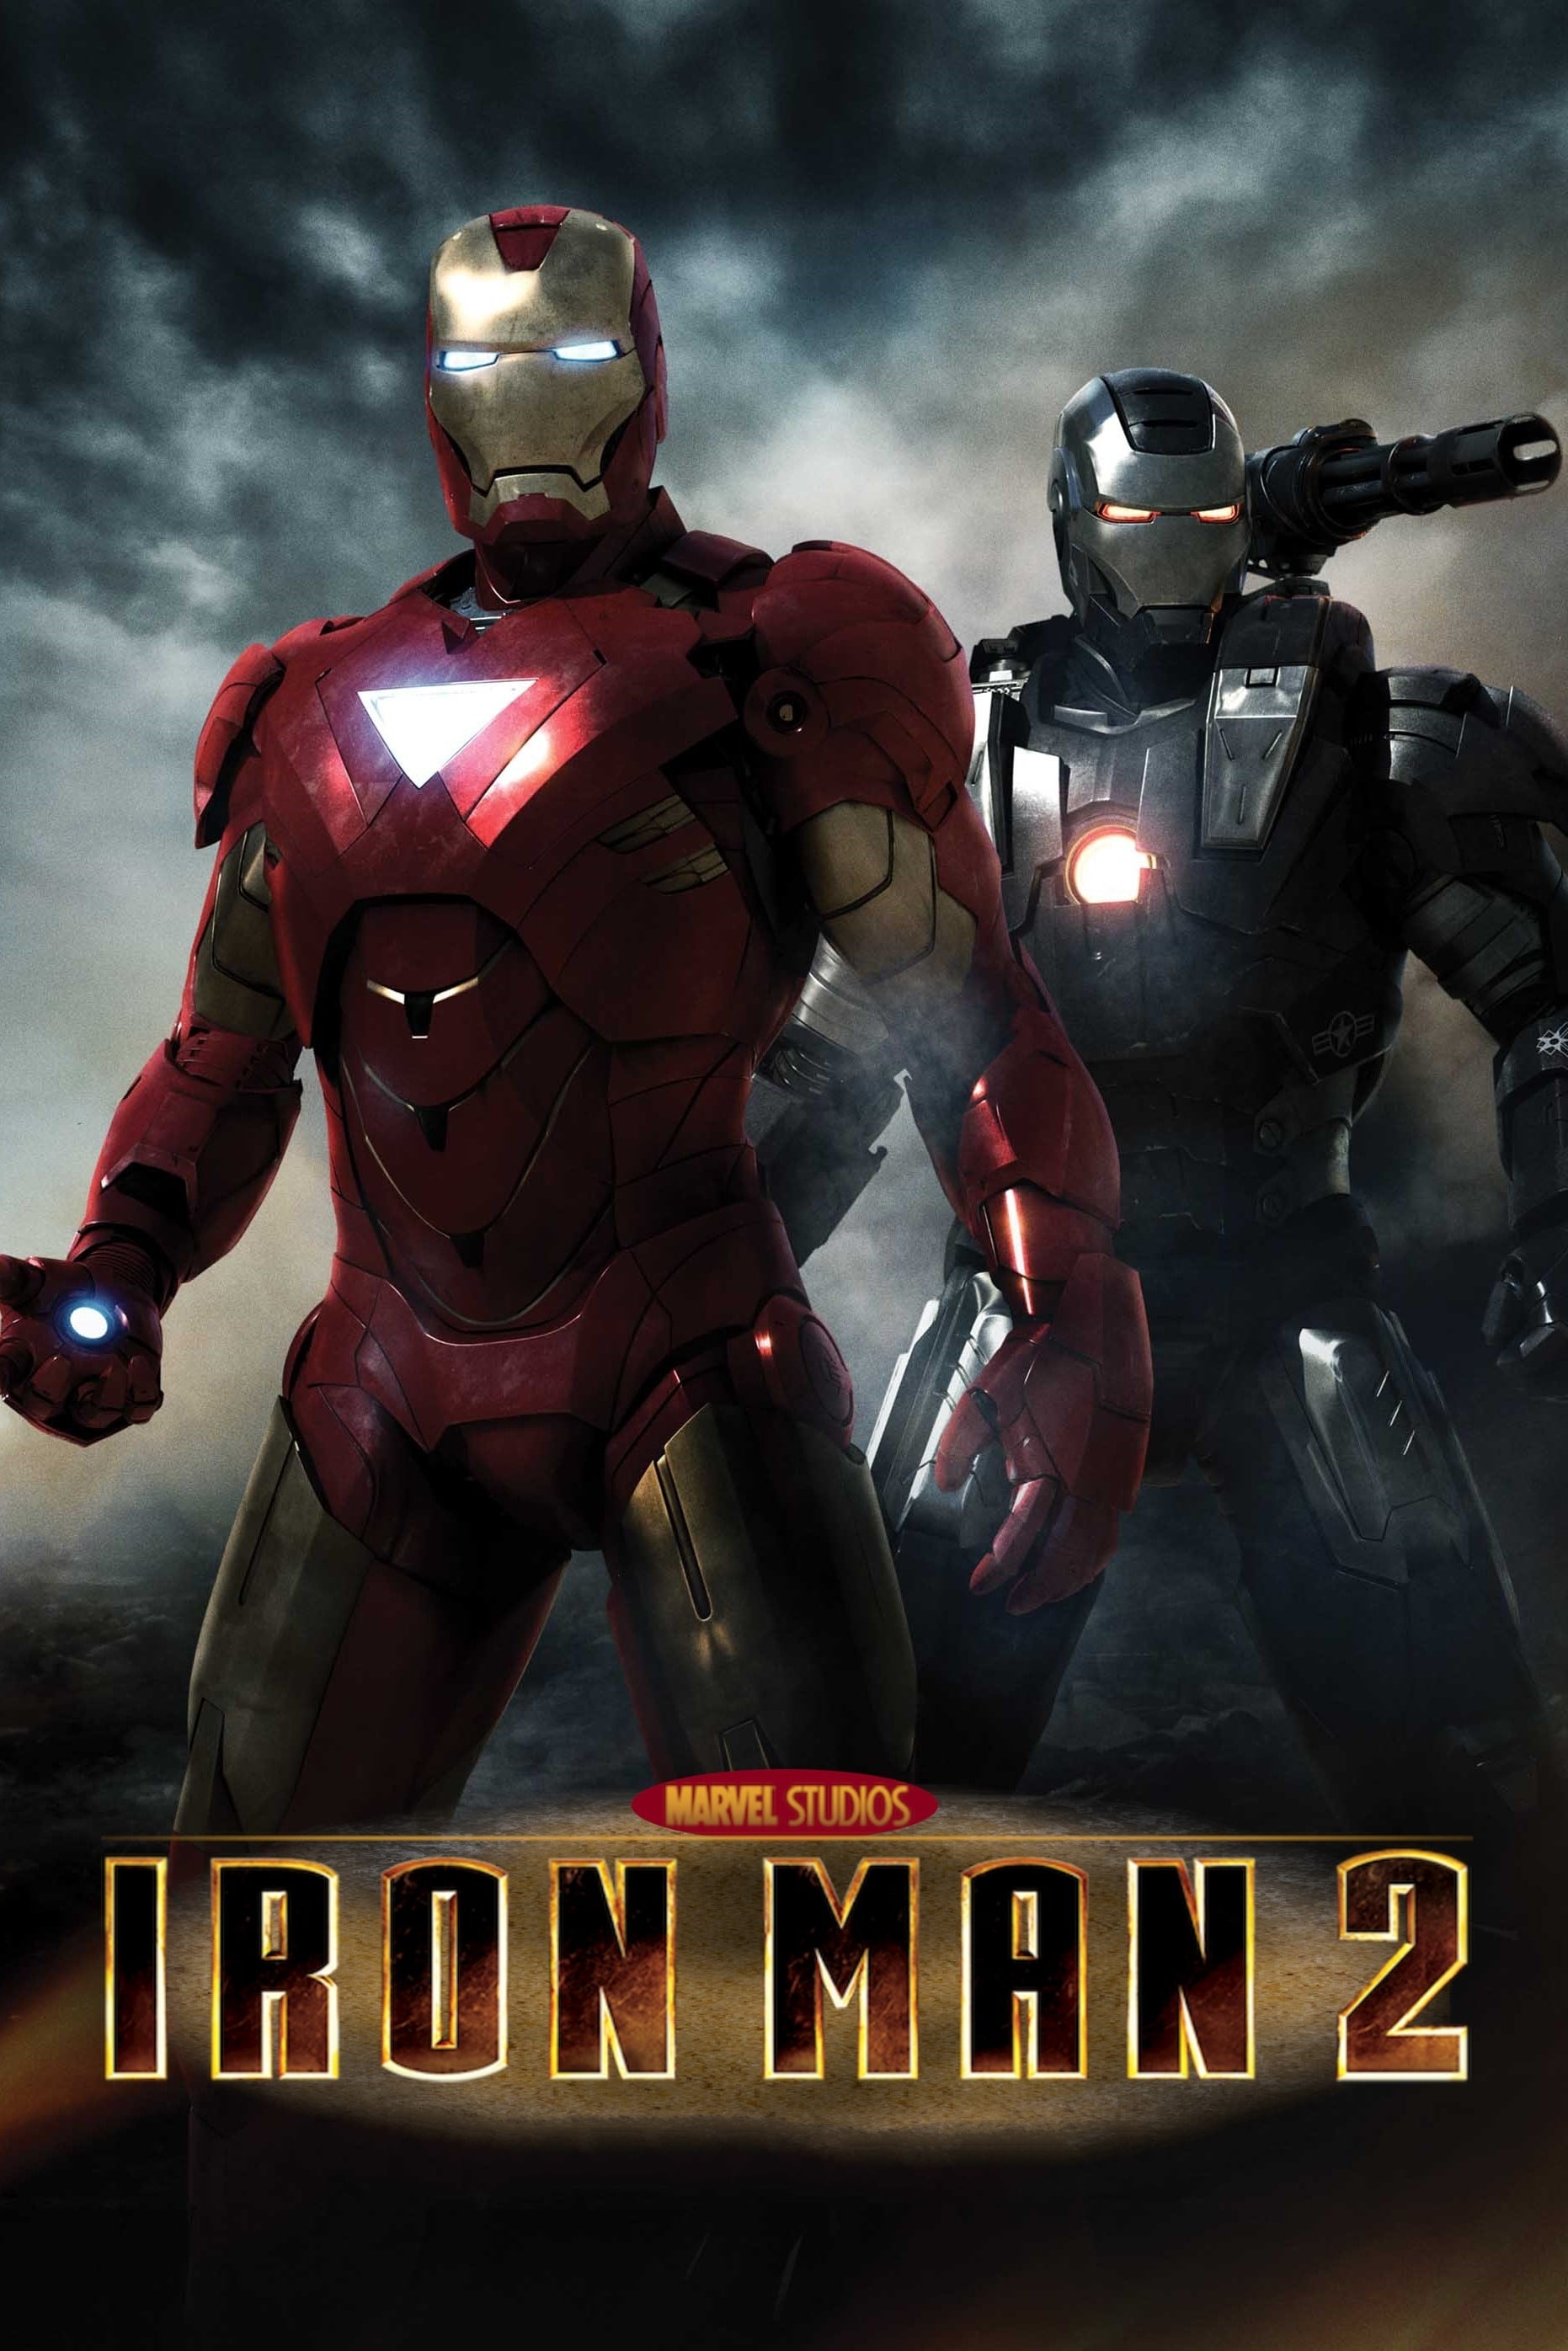 Iron Man 2 Movie poster